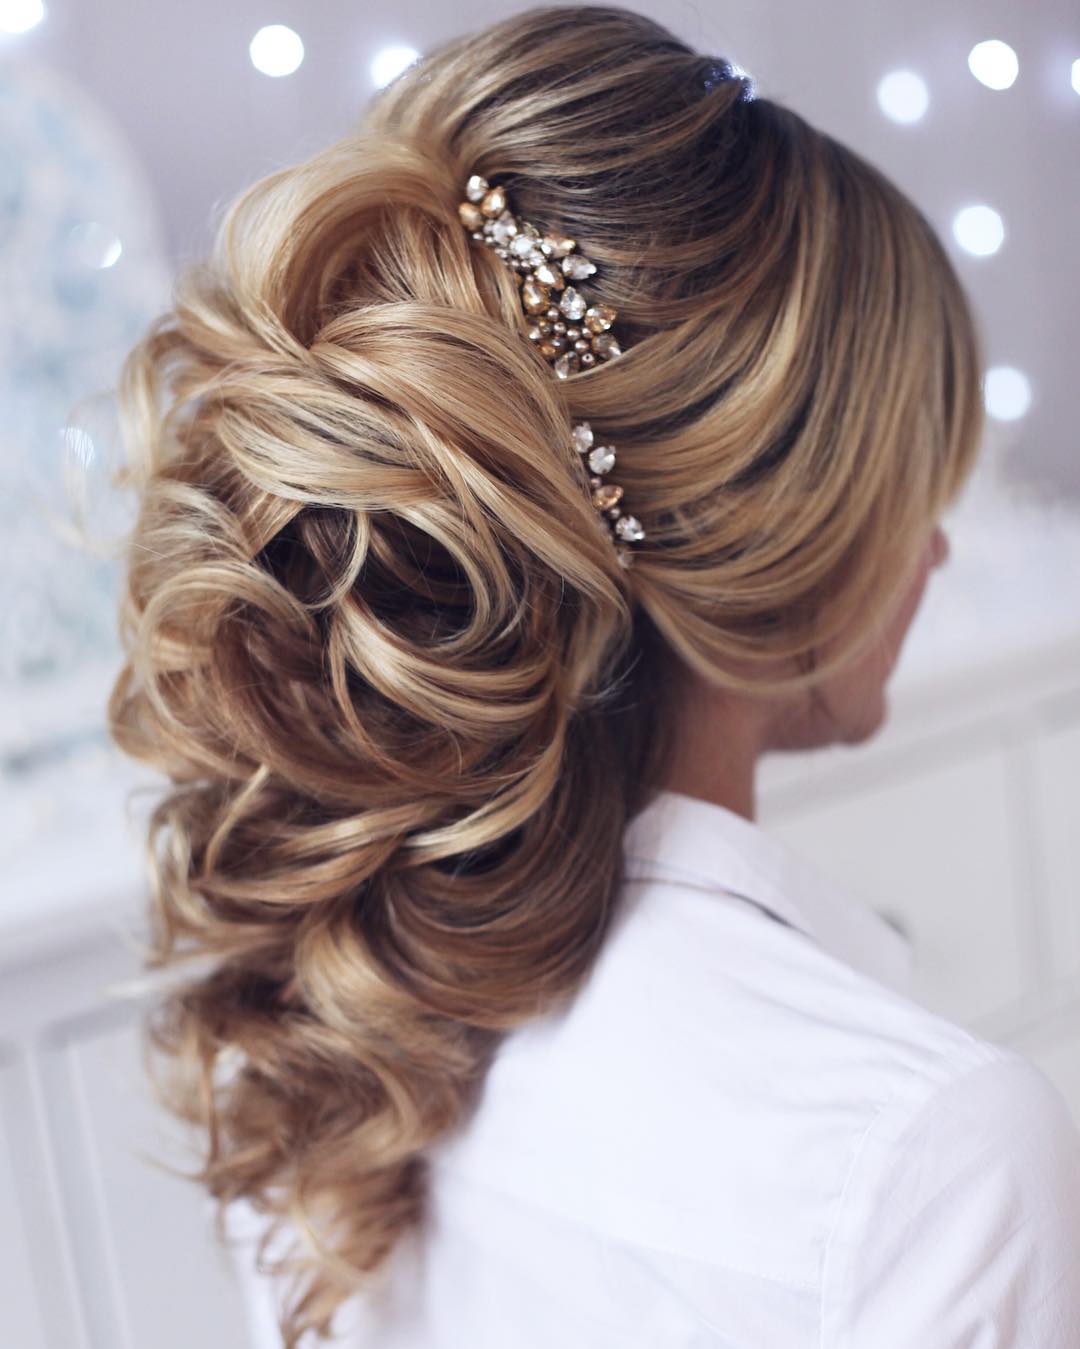 10 Lavish Wedding Hairstyles for Long Hair - Wedding Hairstyle Ideas 2020